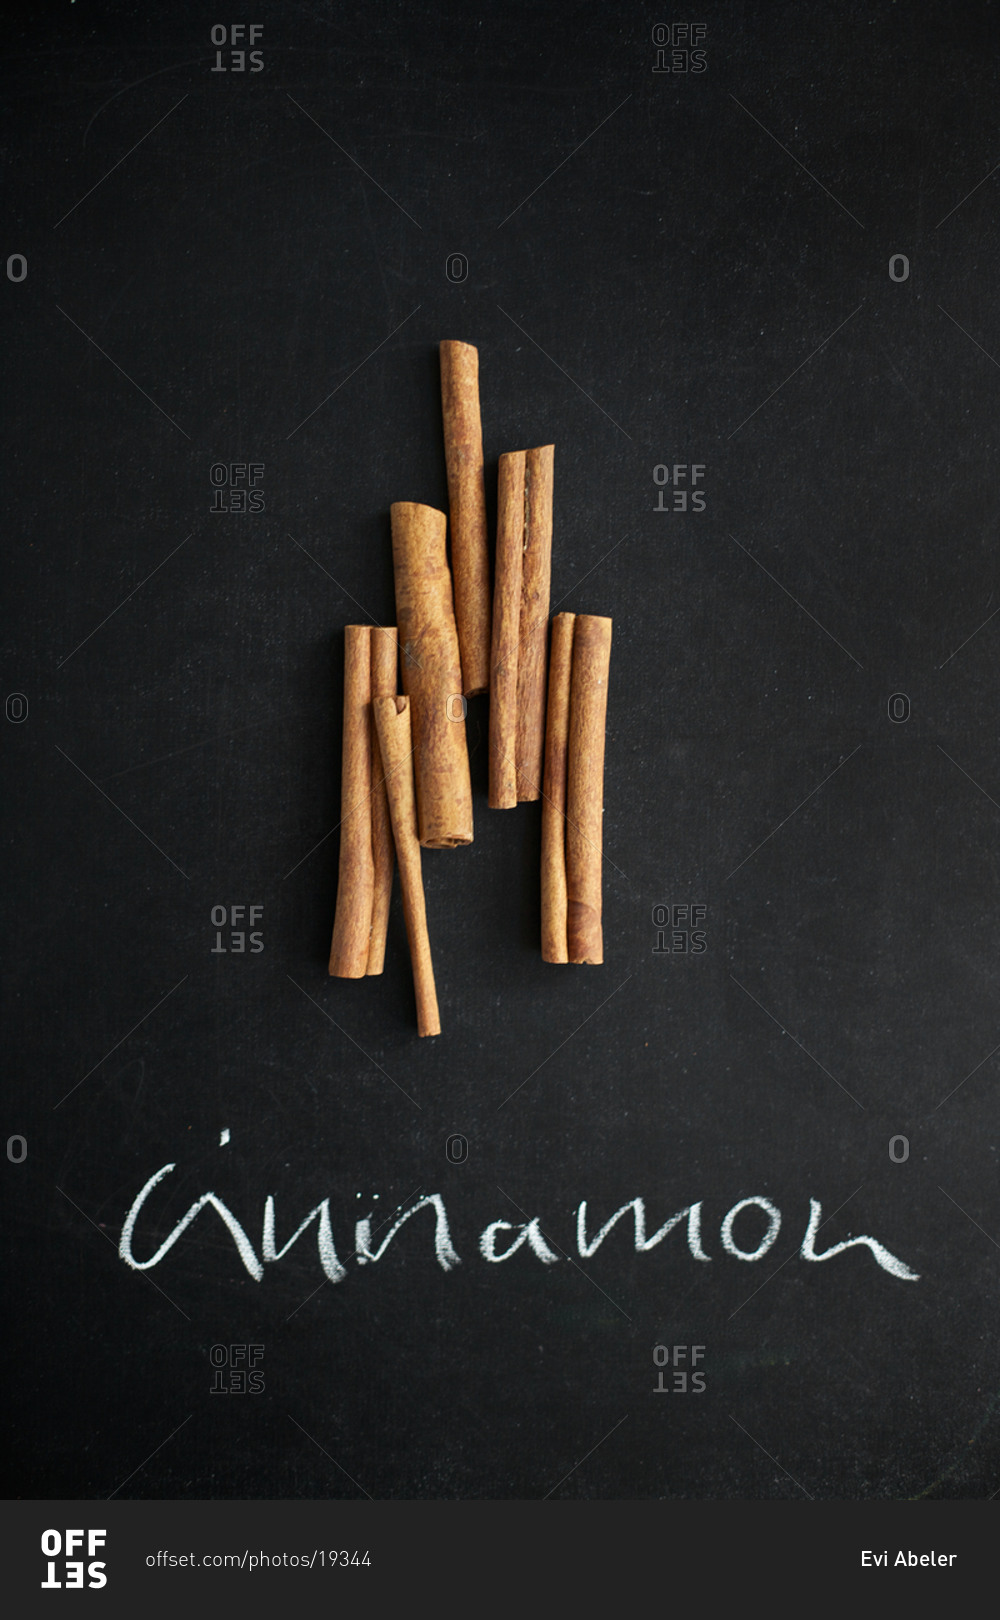 Cinnamon sticks arranged on chalk board with sign